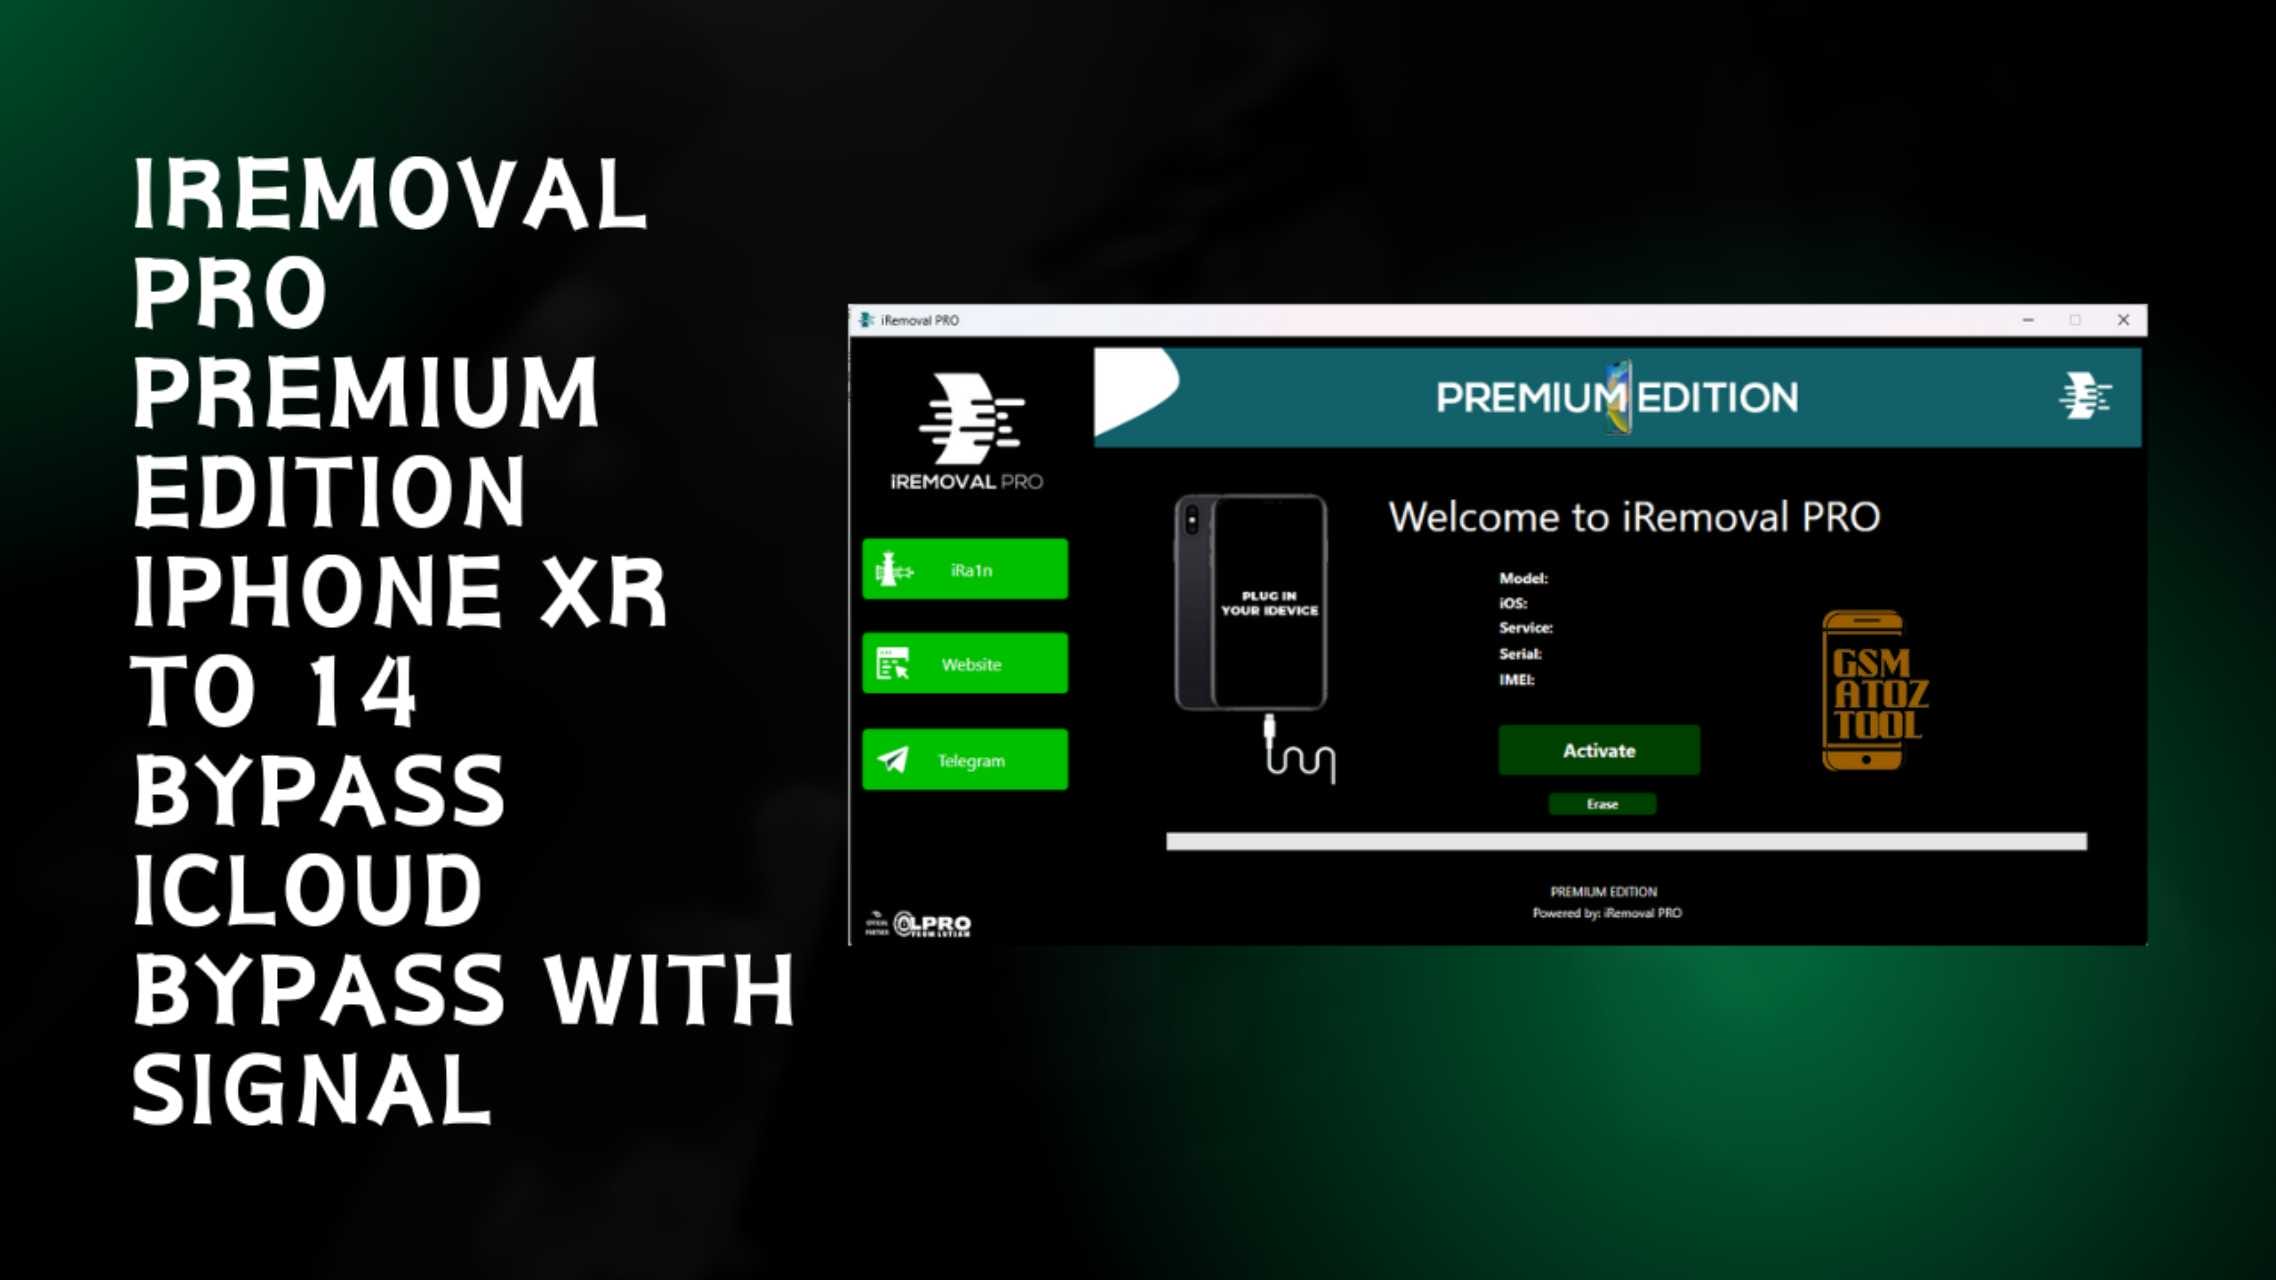 iRemoval Pro Premium Edition